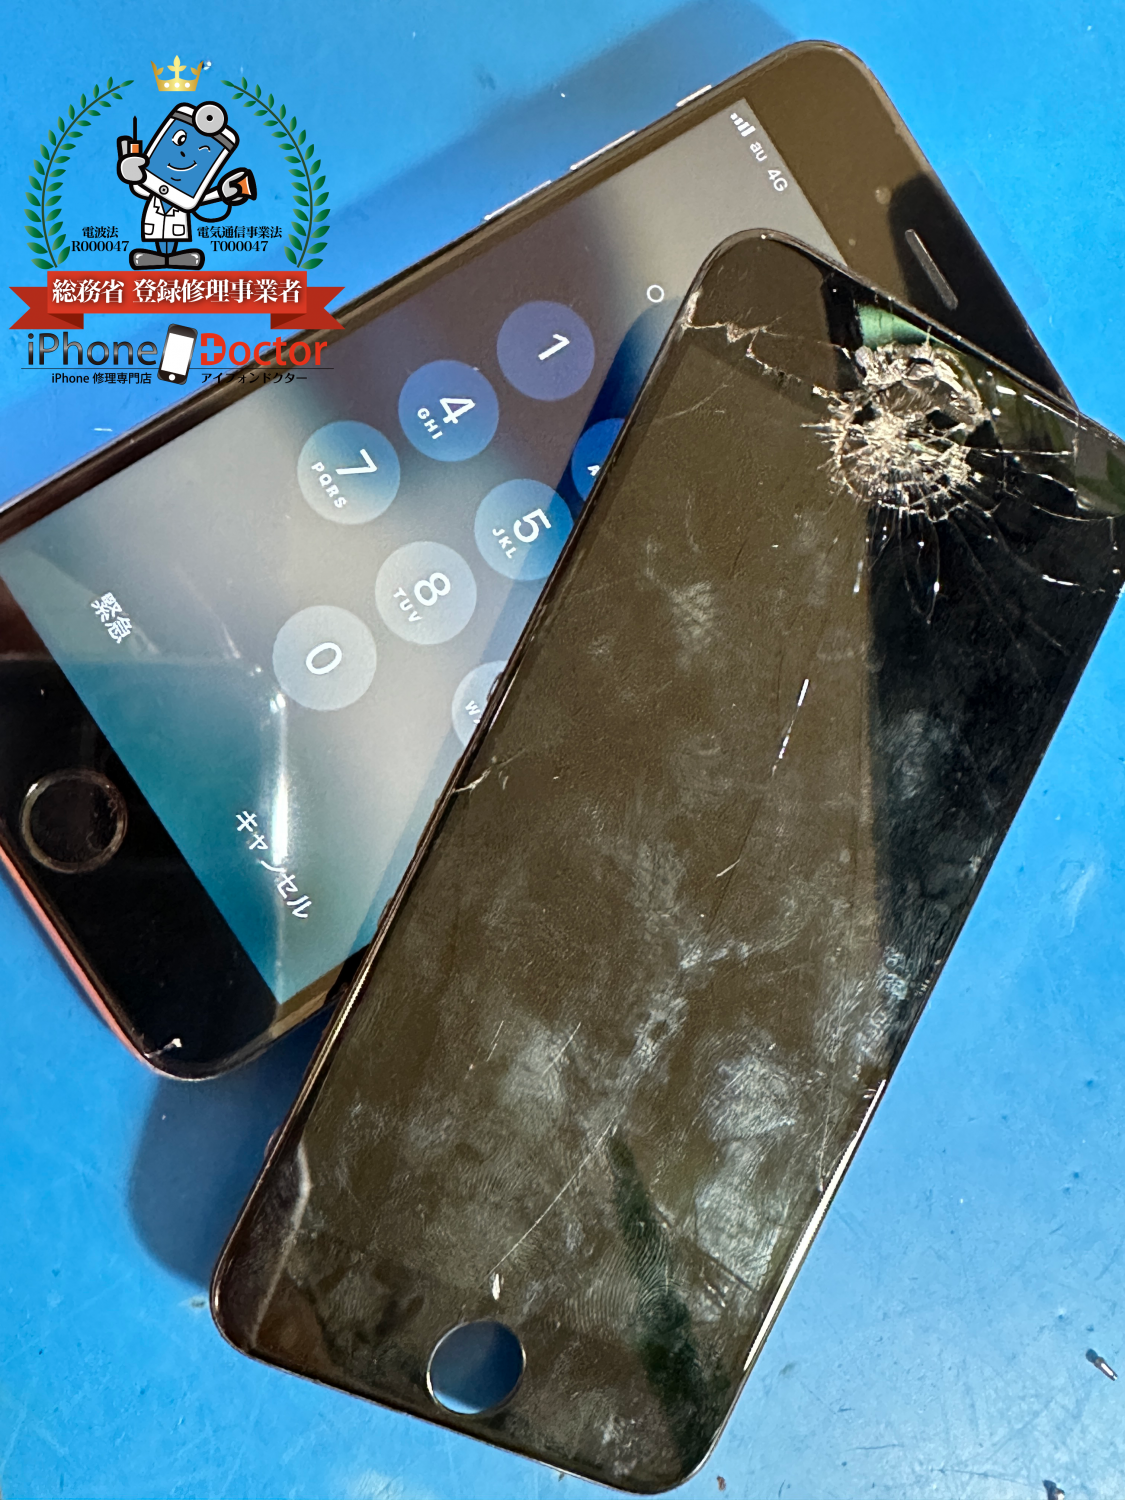 iPhone6sガラス割れ、液晶破損修理